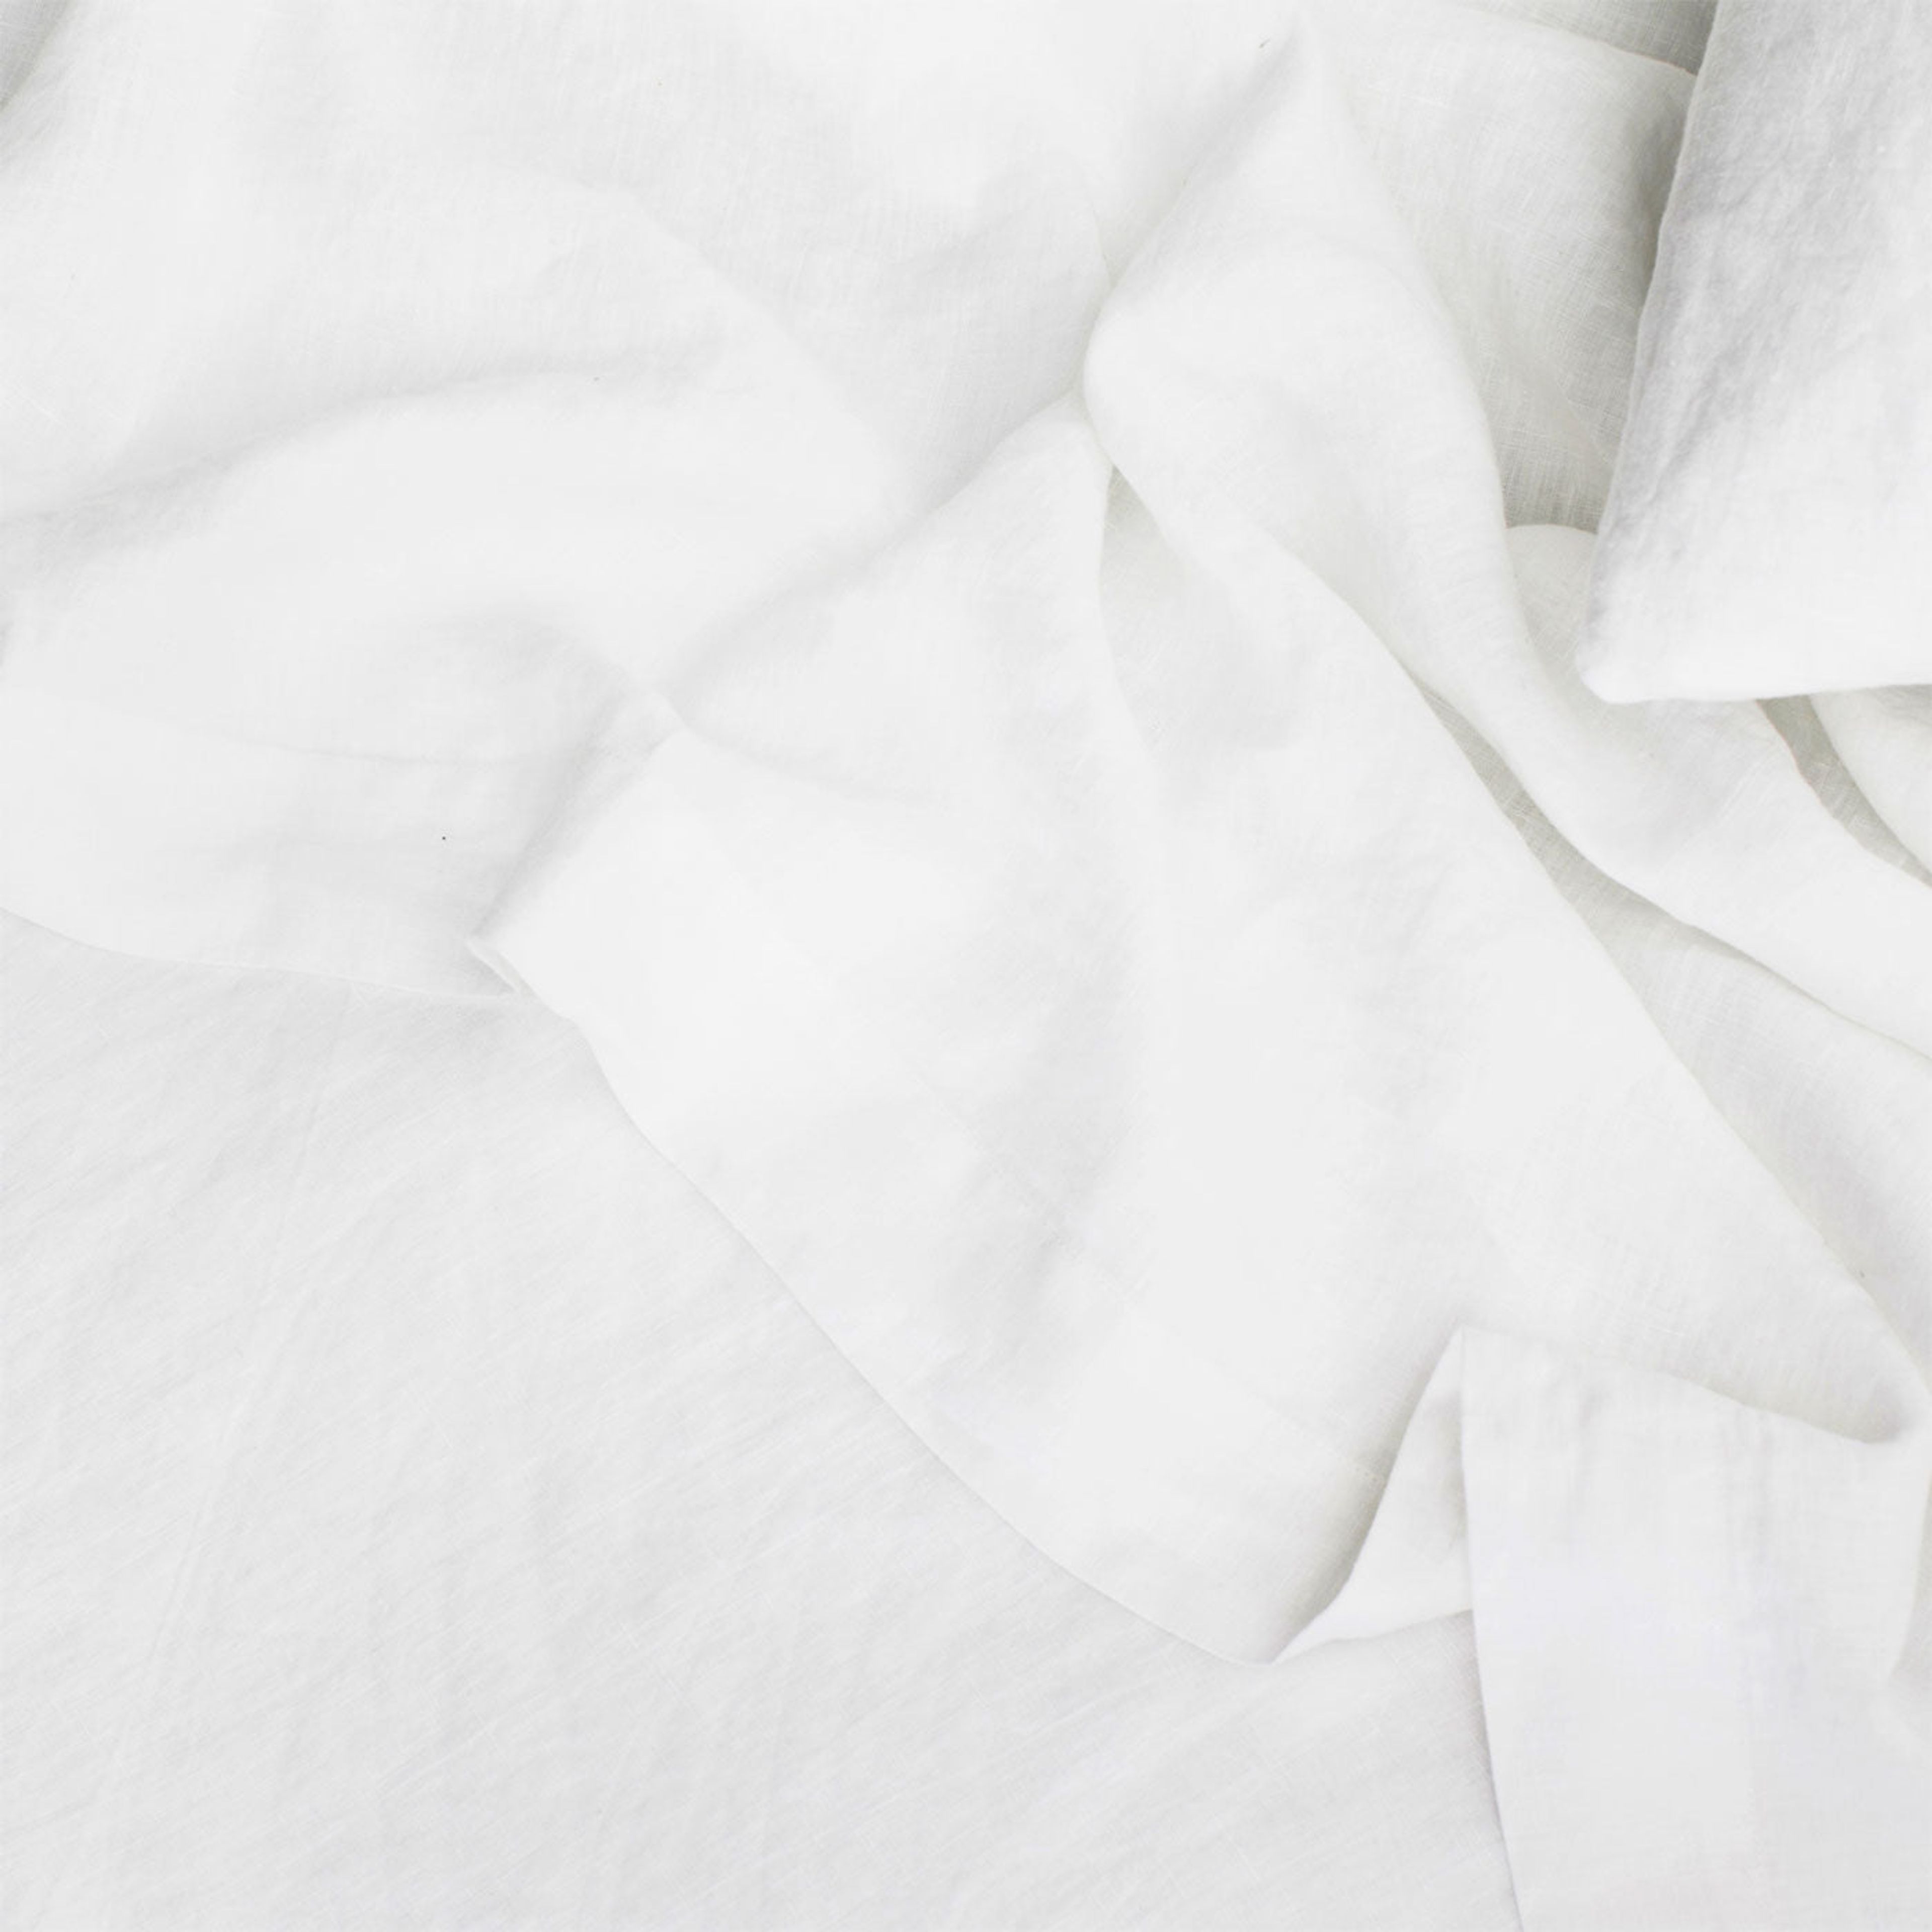 Linen Sheet Set With Pillowcases - White